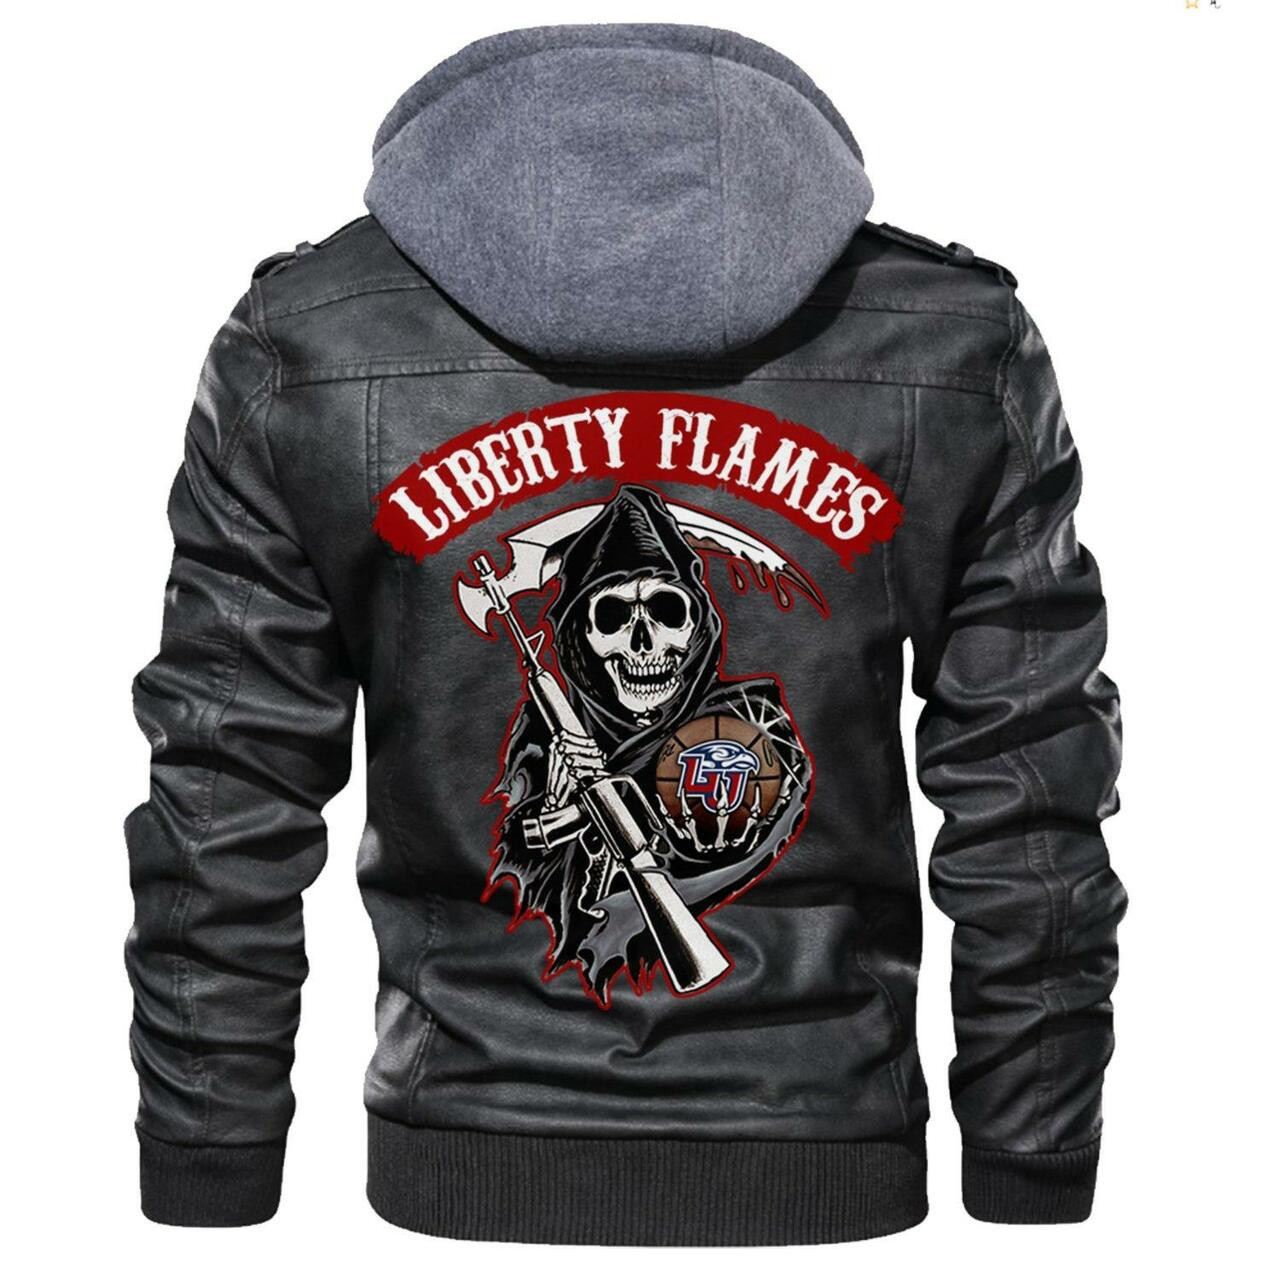 Top leather jacket Sells Best on Techcomshop 43